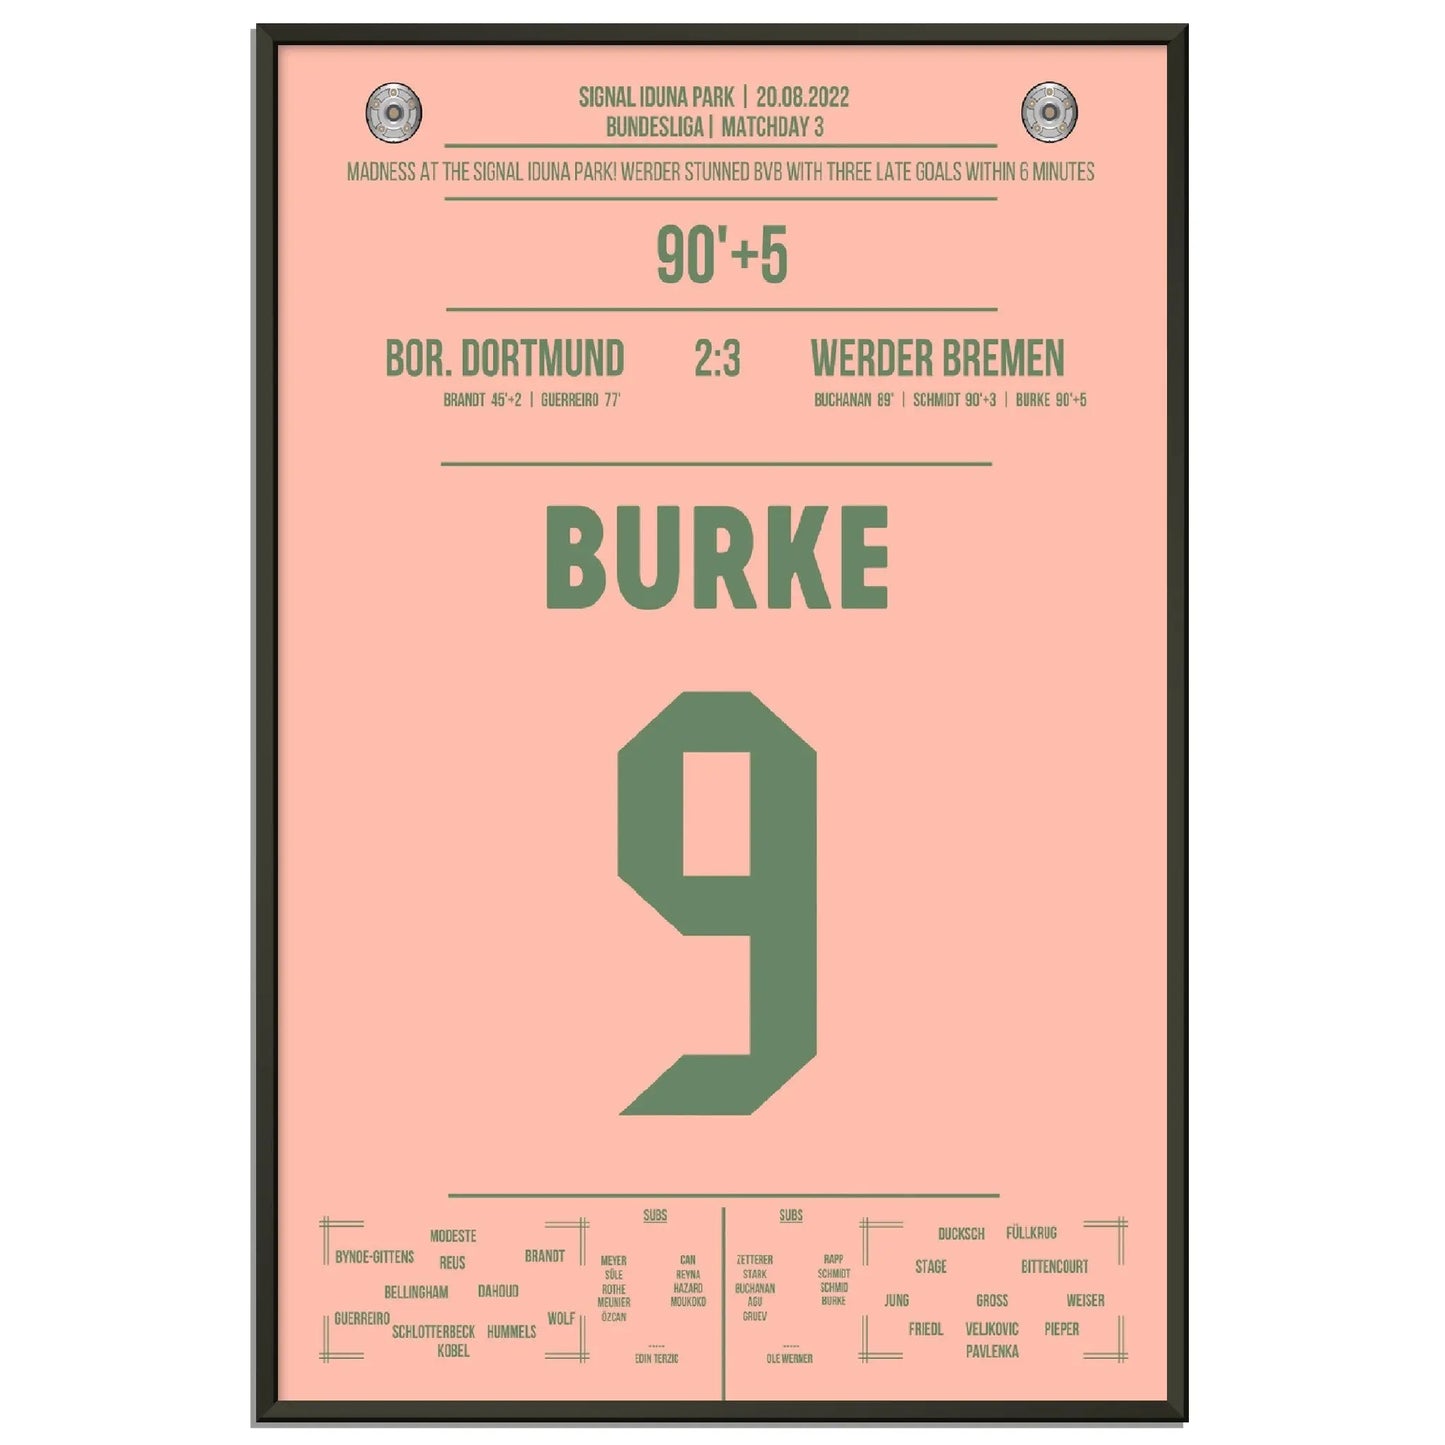 Burke krönt Bremen's irre Aufholjagd in Dortmund 2022 